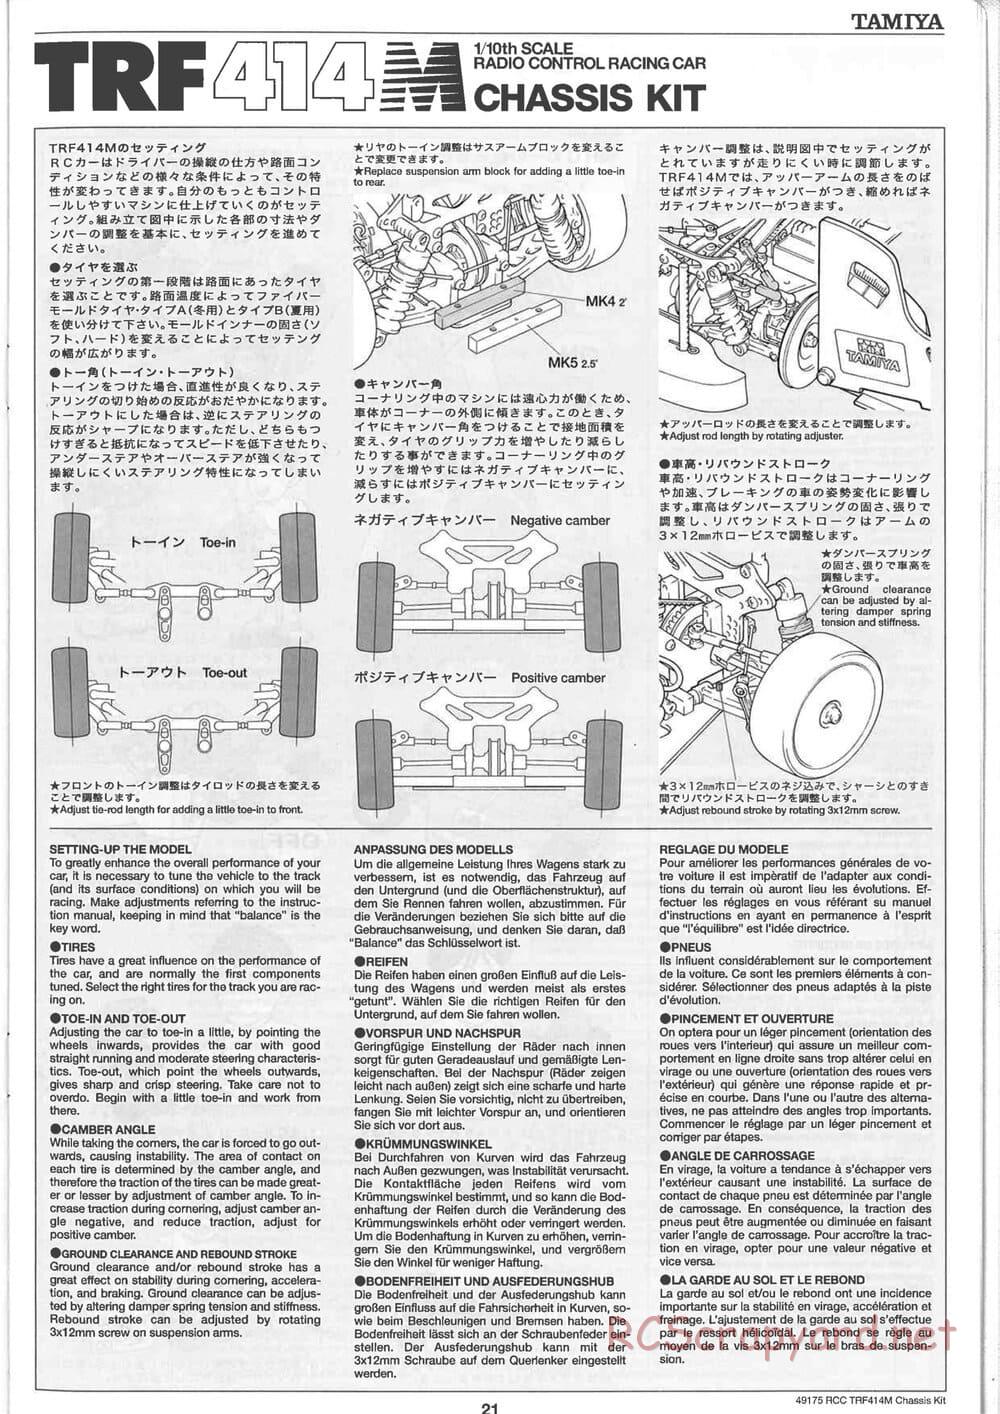 Tamiya - TRF414M Chassis - Manual - Page 21